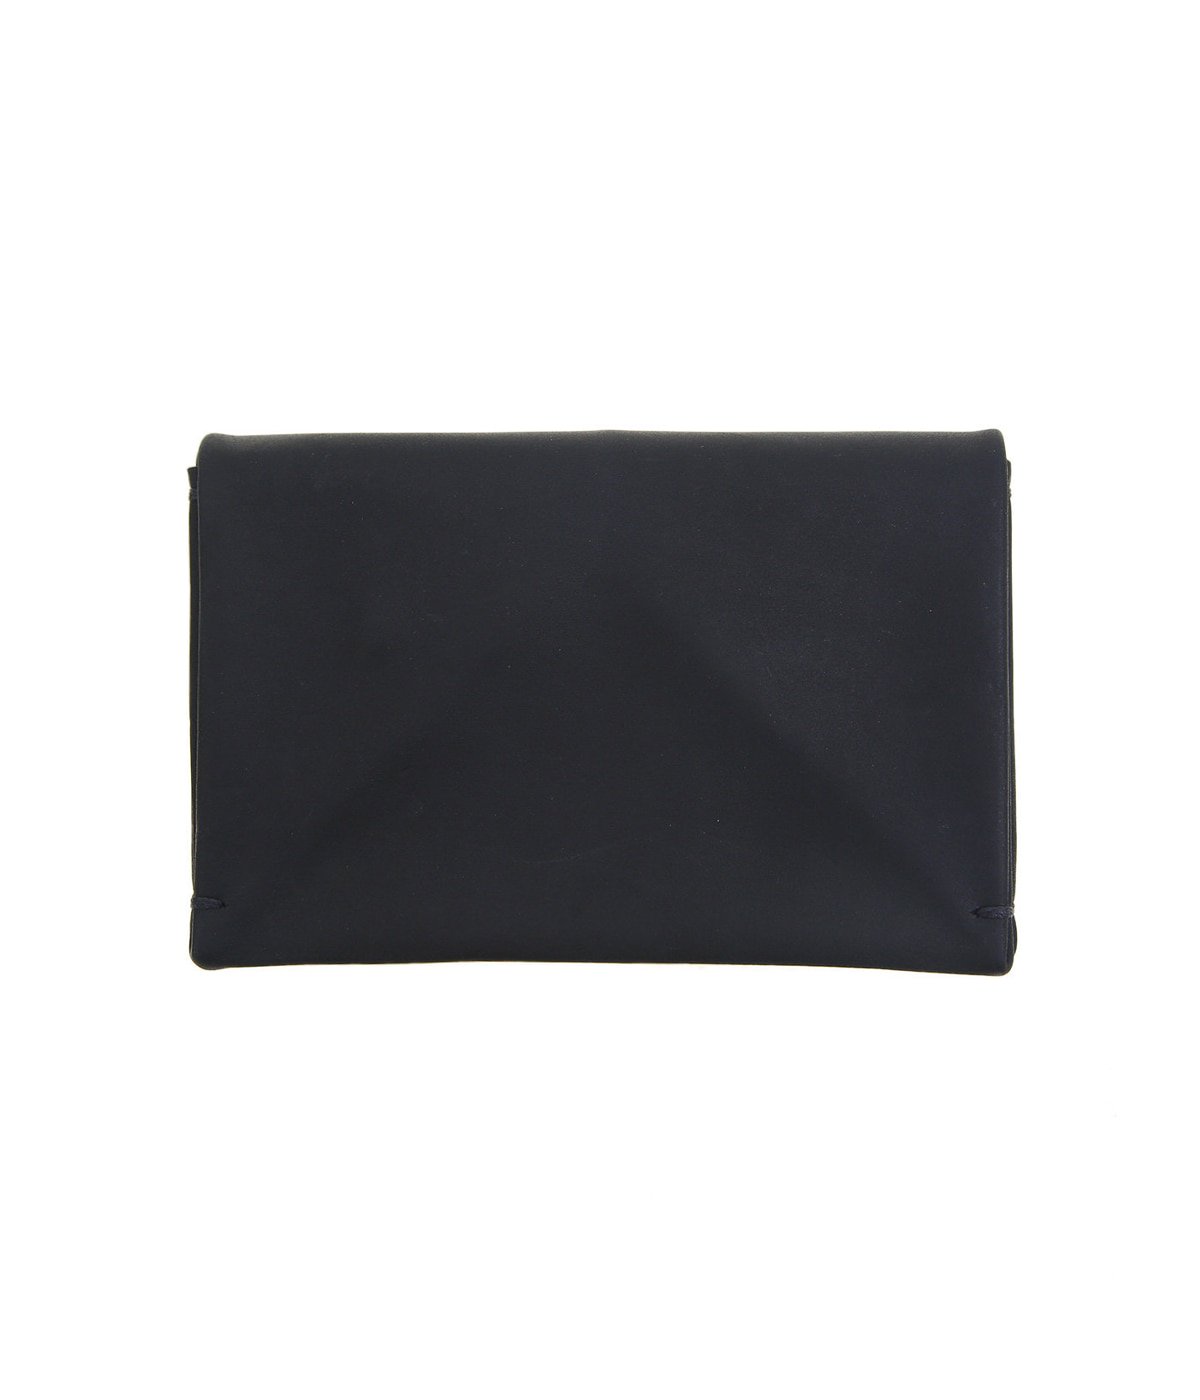 large wallet | m.a+(エムエークロス) / ファッション雑貨 財布